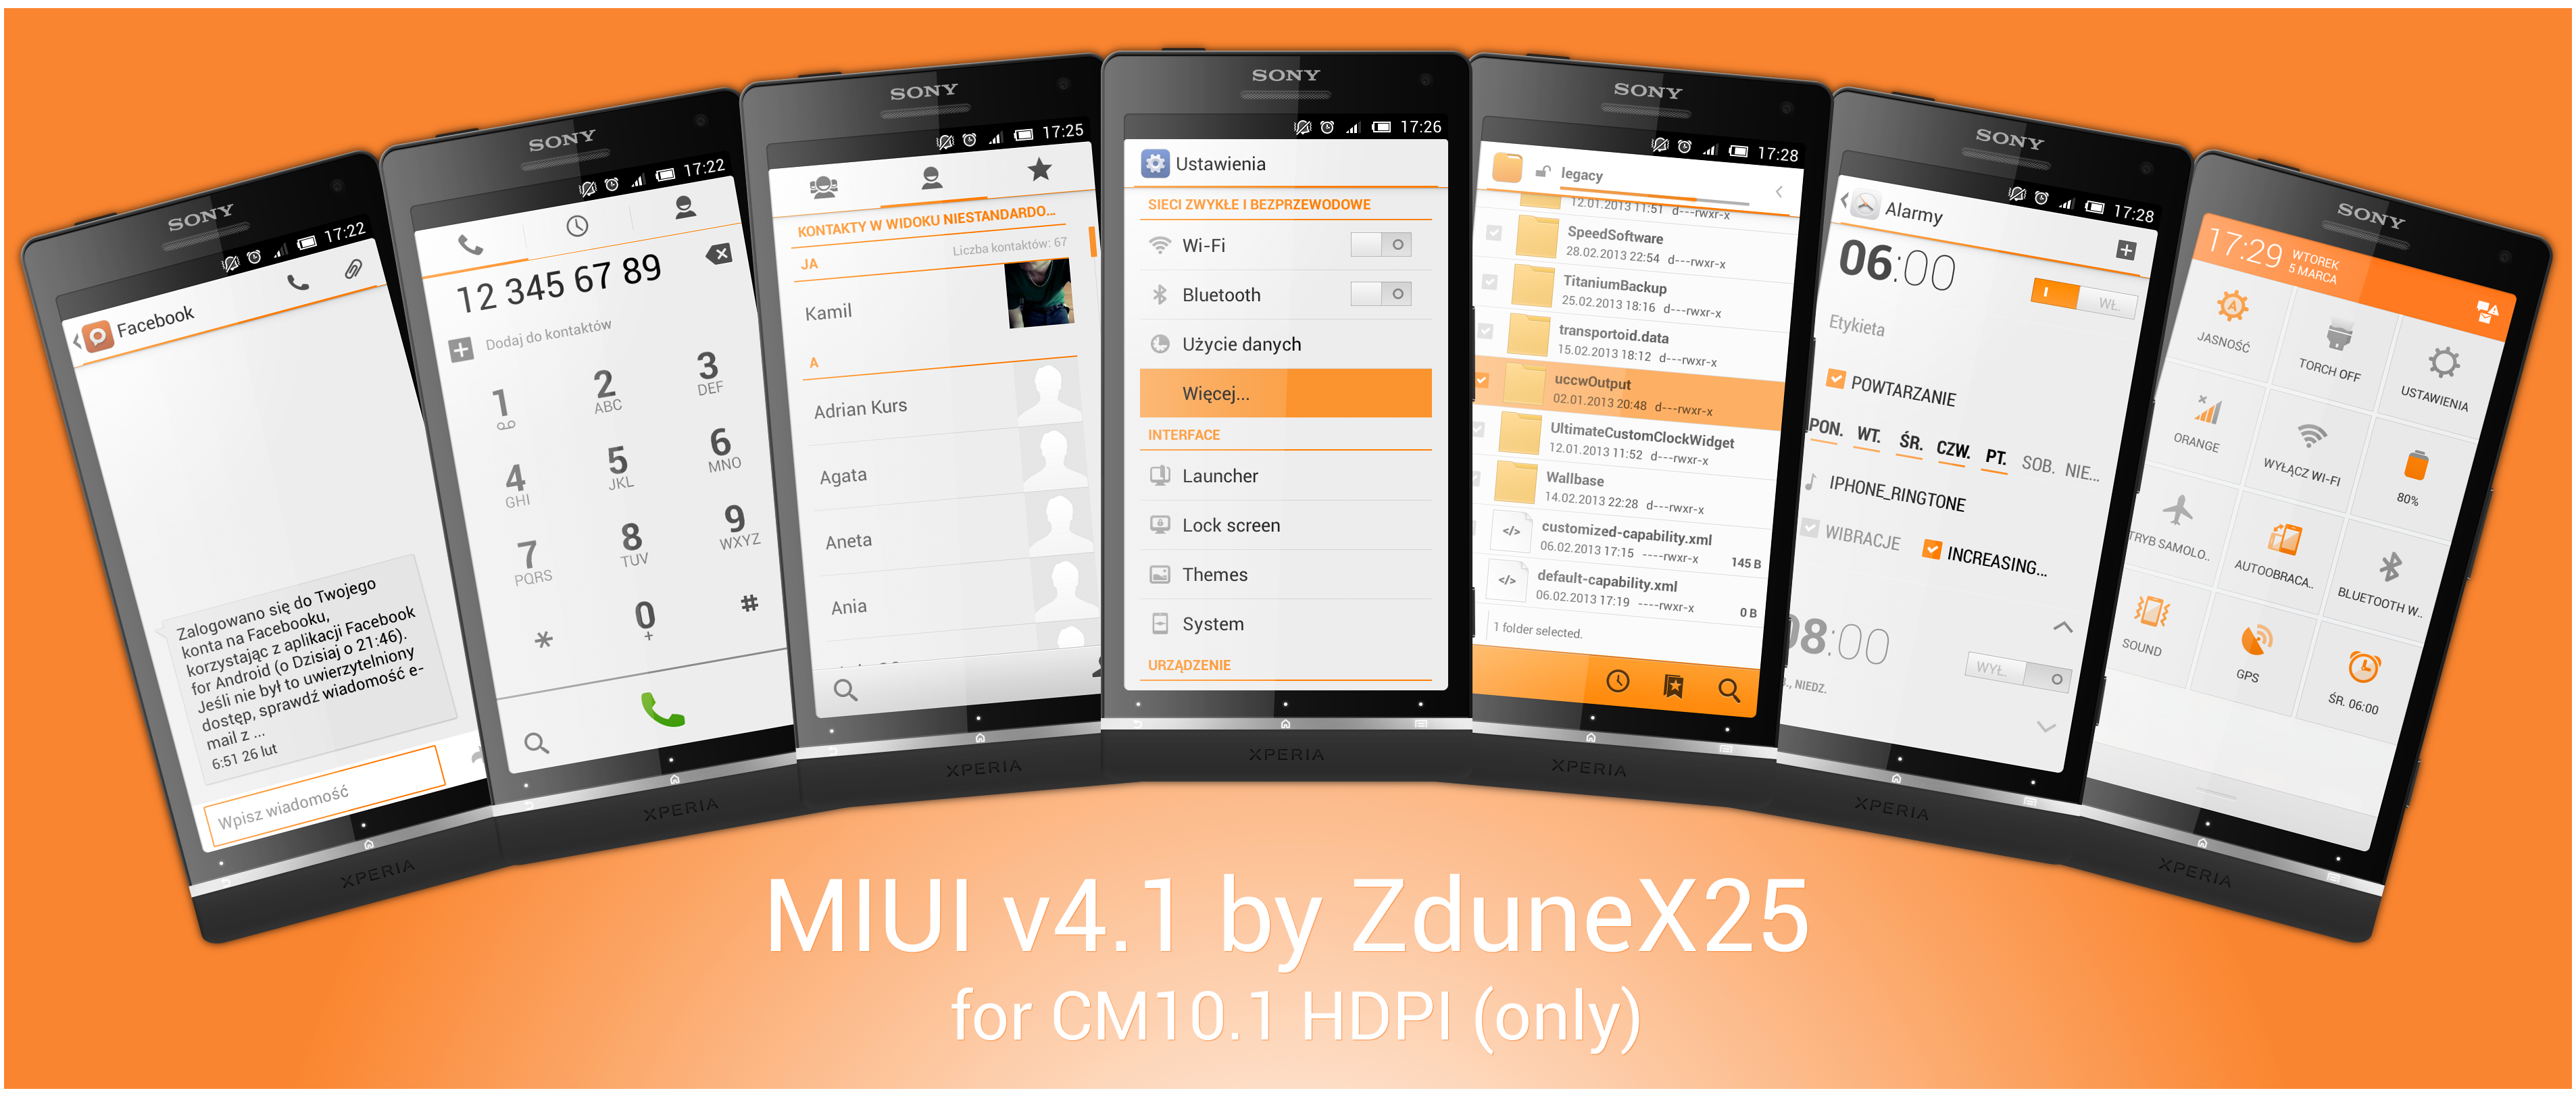 MIUIv4.1 CM10.1 HDPI by ZduneX25